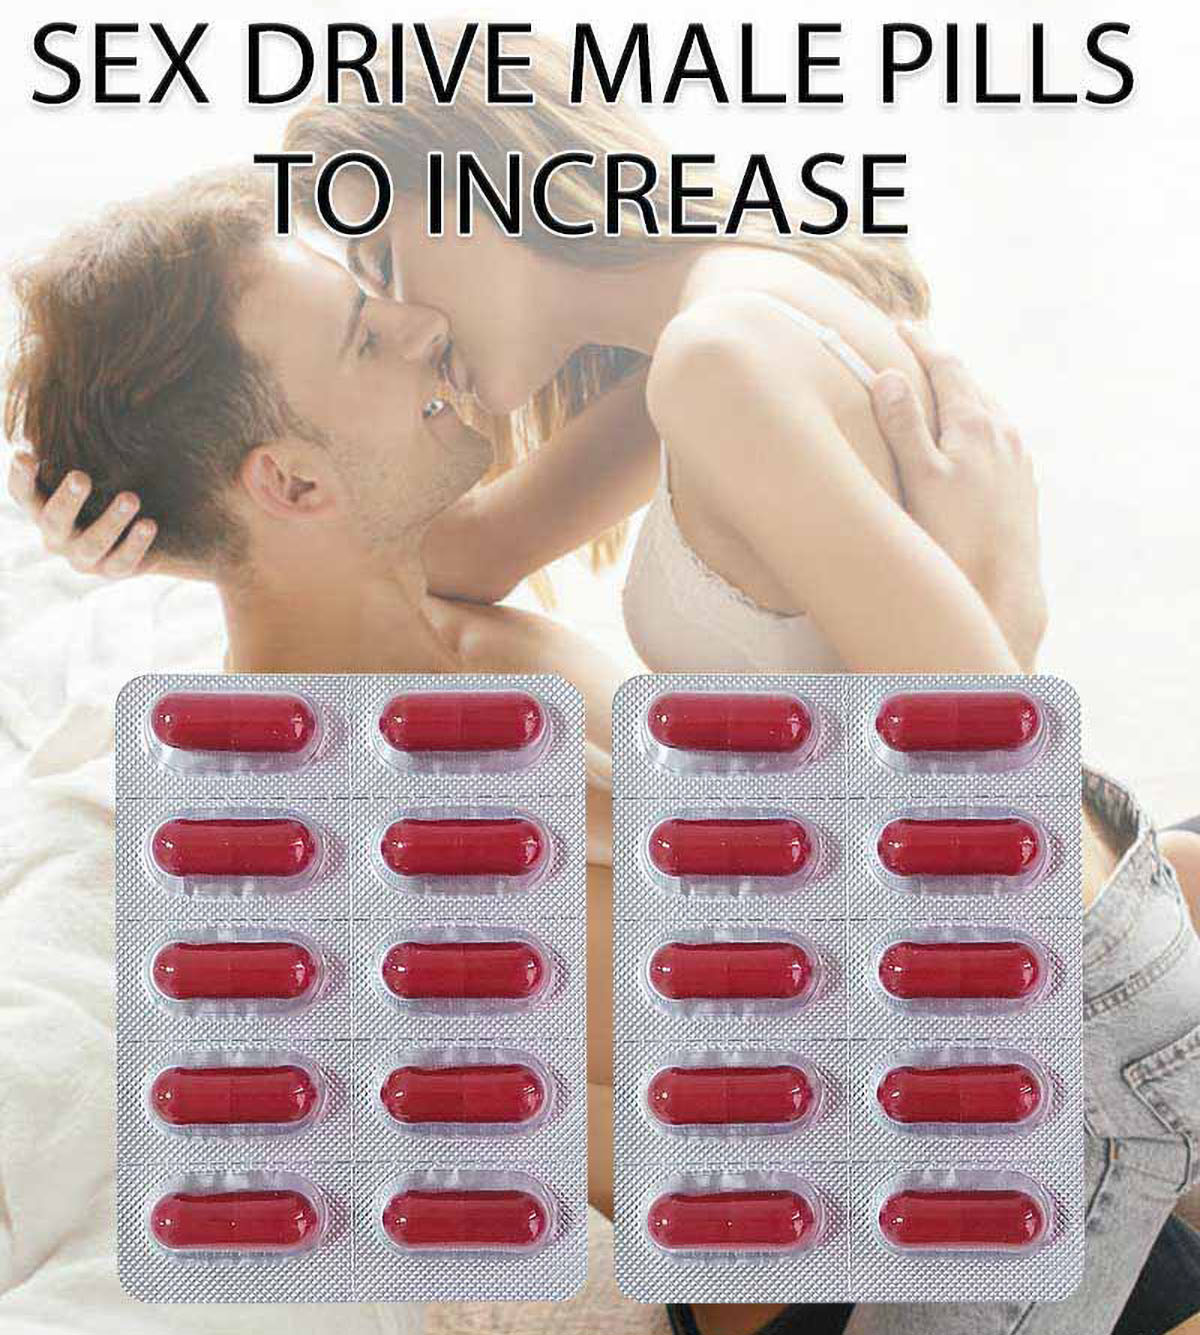 Herbal viagra pills